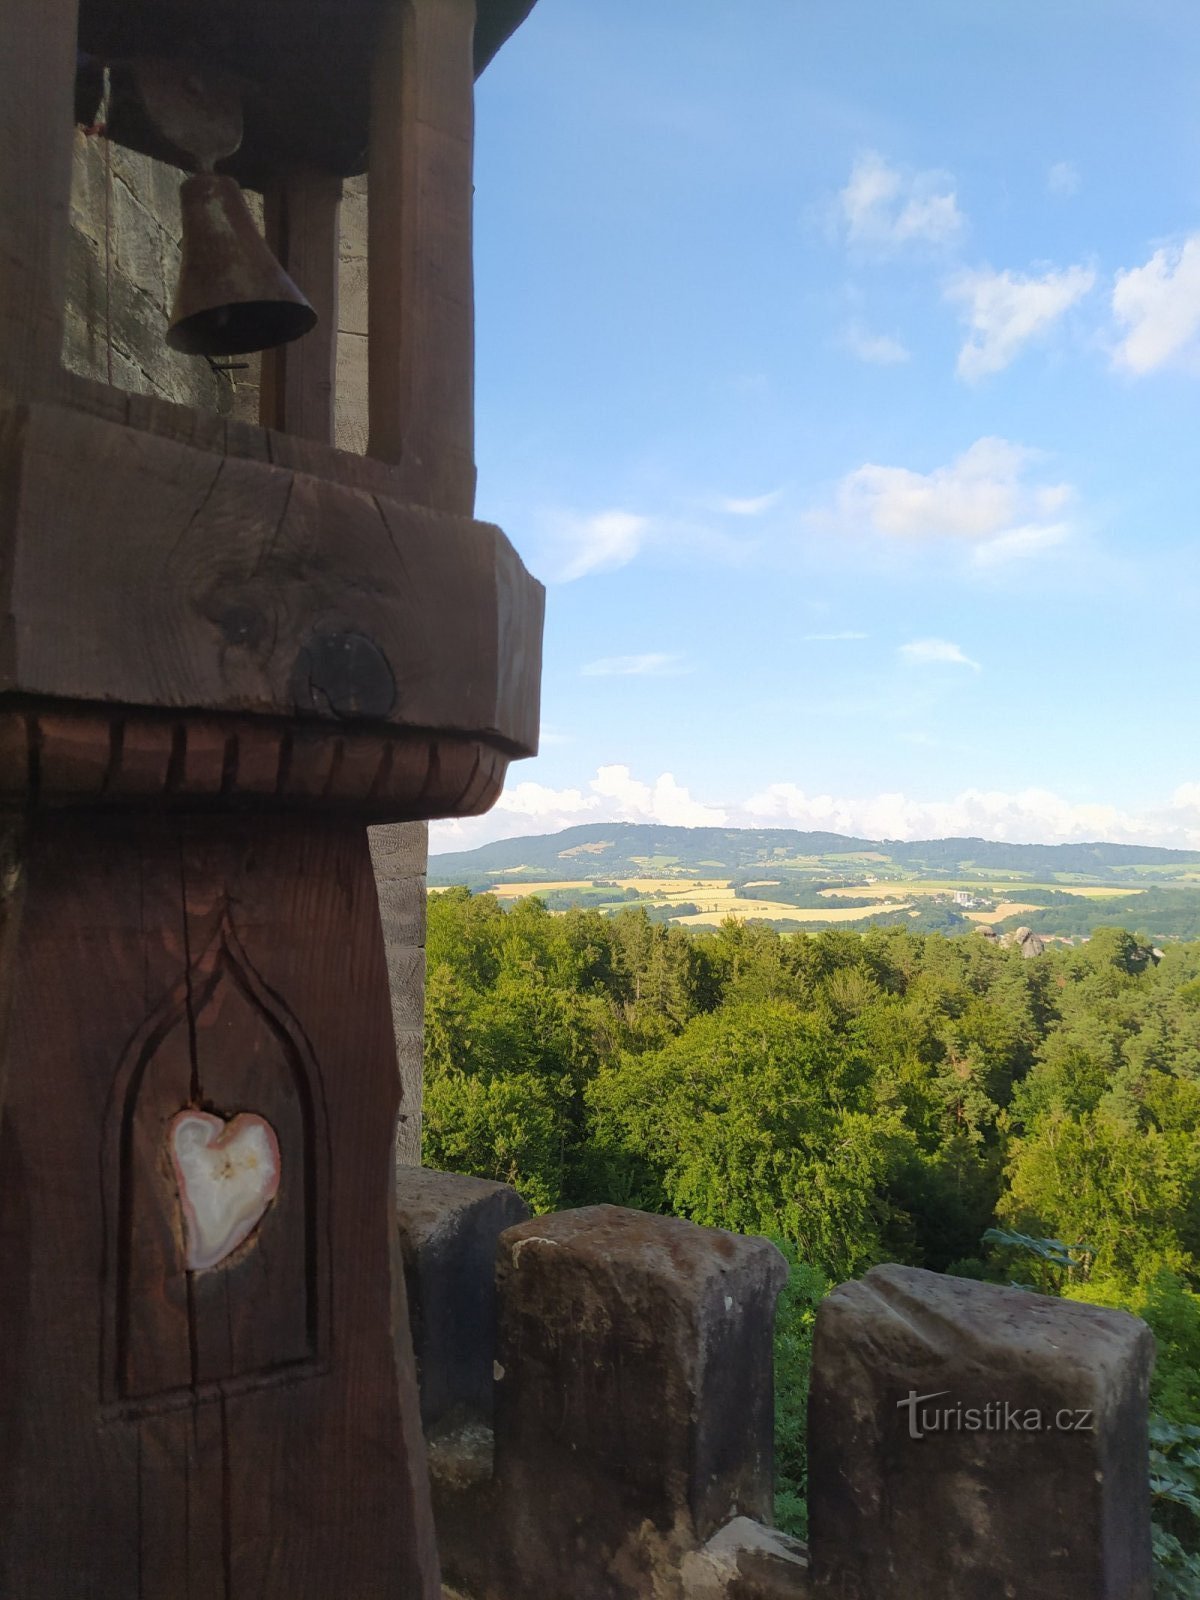 Bohemian Paradise - Hruboskalsko, vista do Castelo de Hrubá Skála